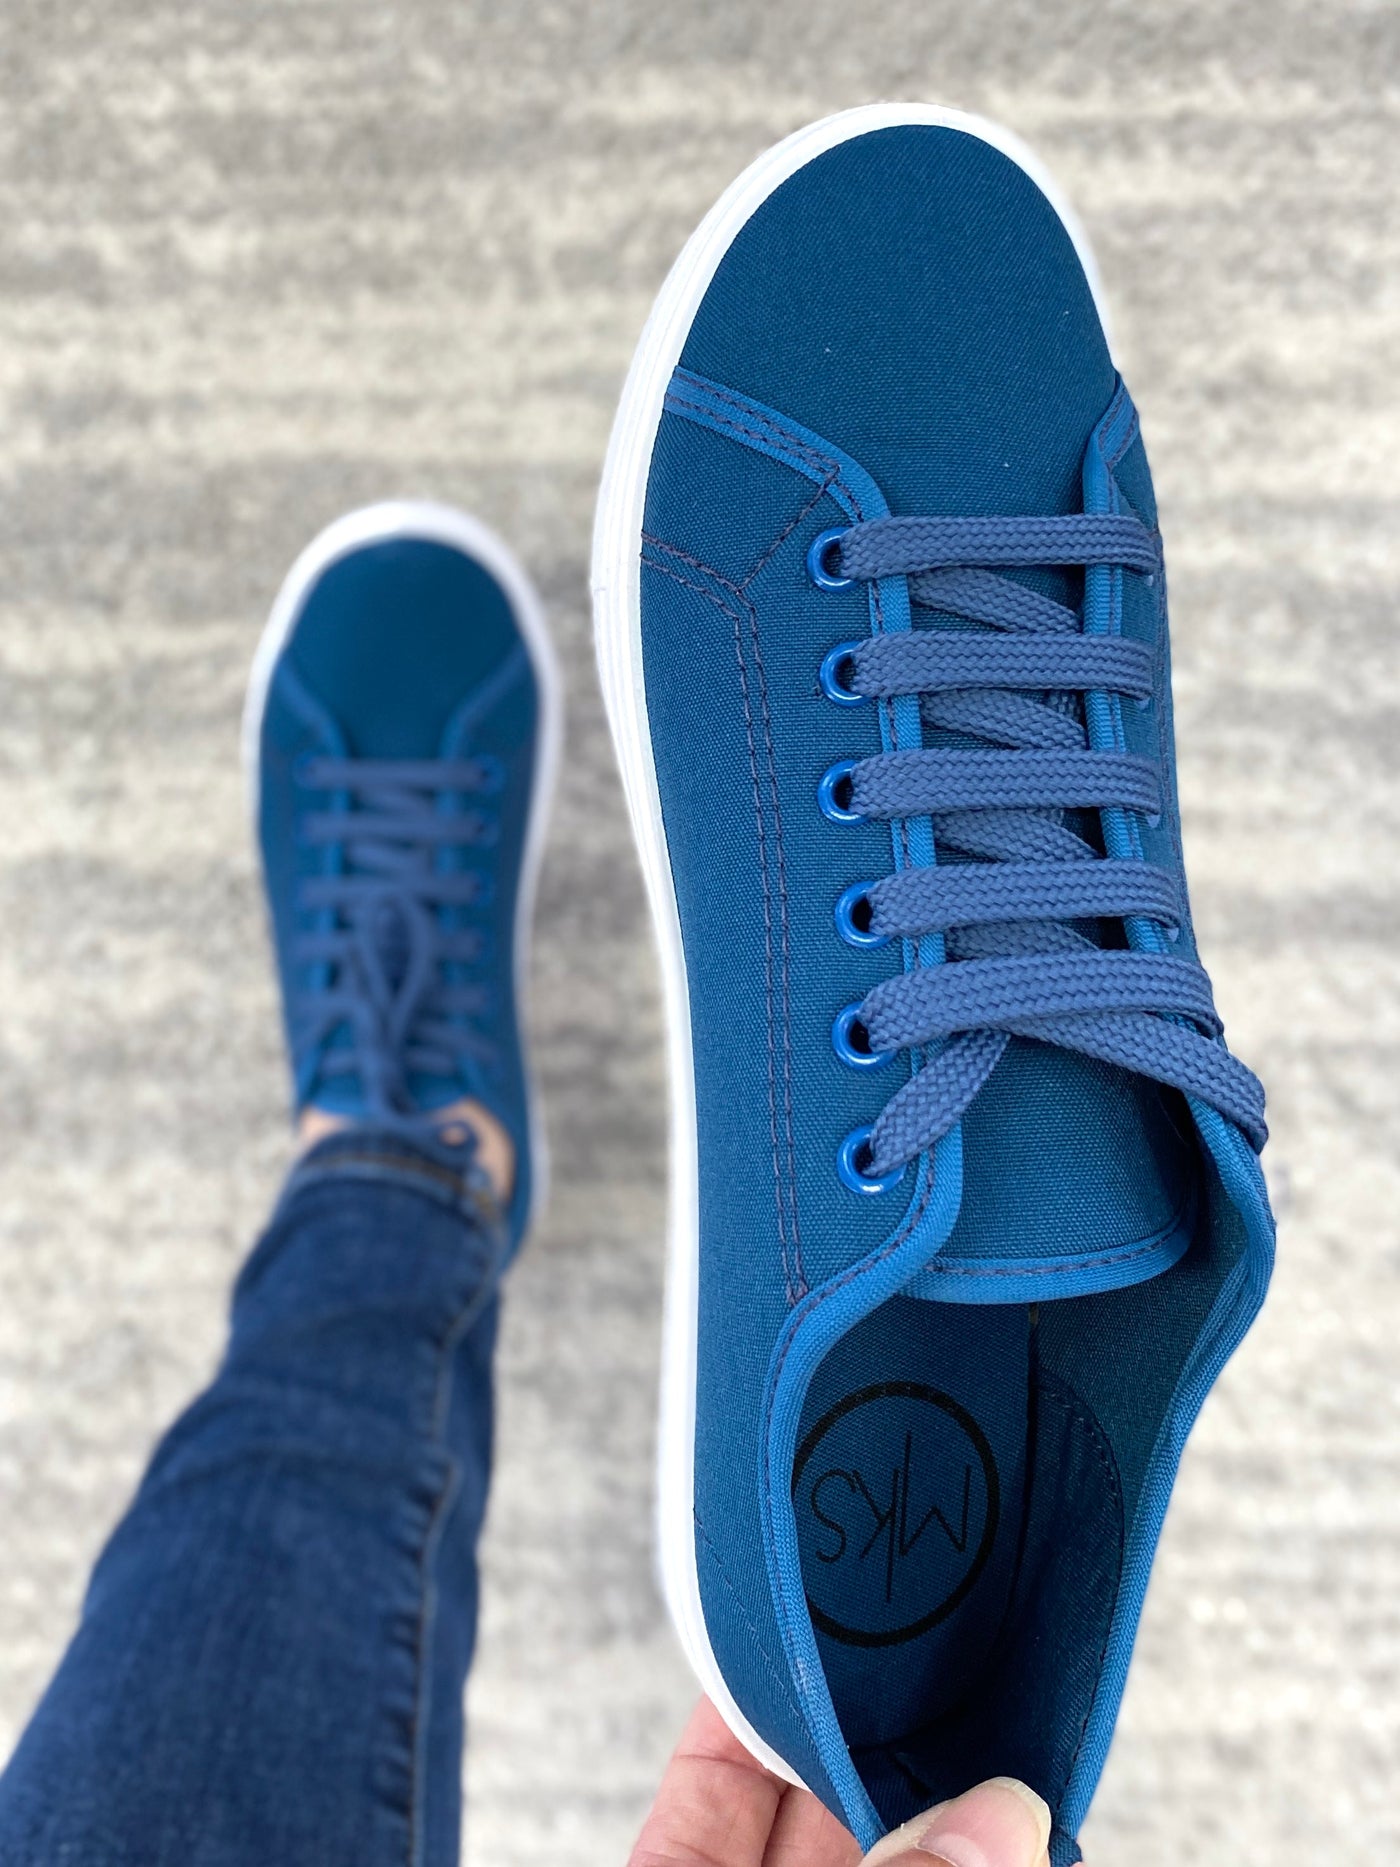 Free Spirit Sneakers in Blue - Copper + Rose